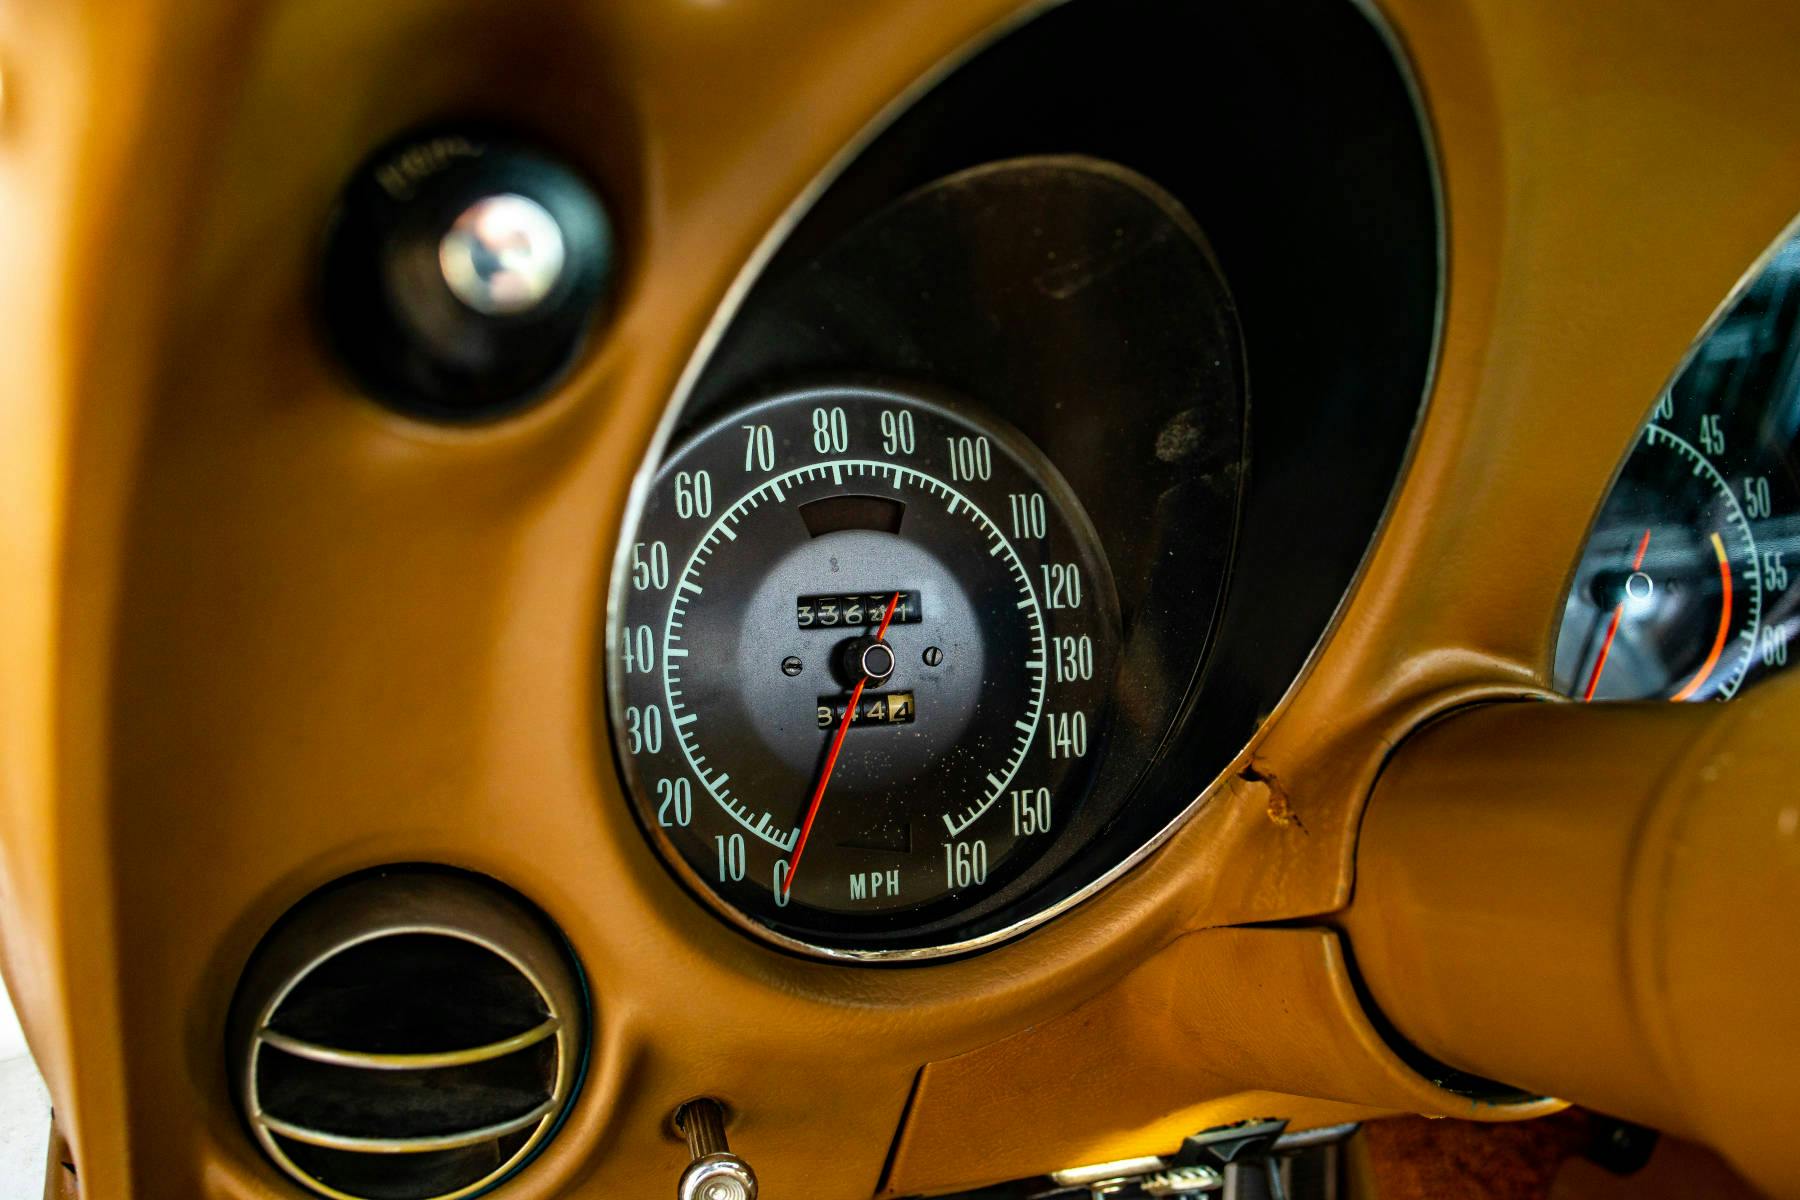 1969 Chevrolet Corvette Stingray Convertible interior speedometer gauge